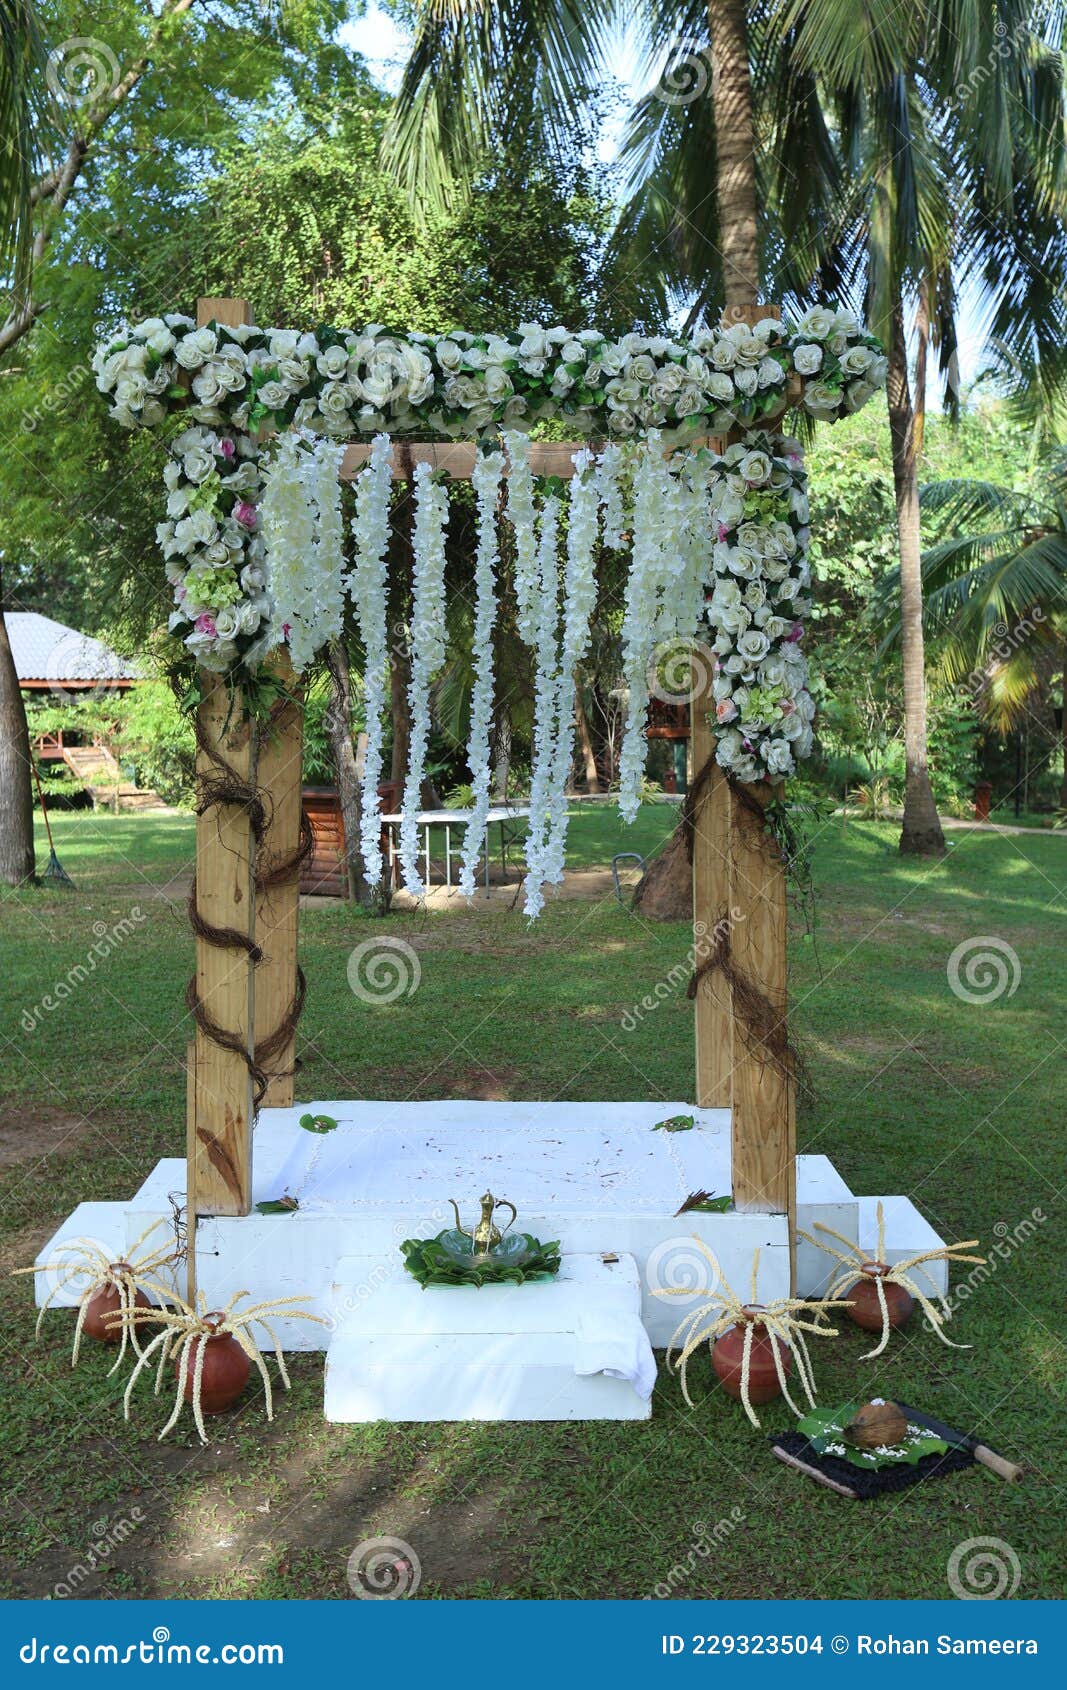 wedding arch poruwa. decorated wooden platform used for traditional sinhalese wedding ceremonies.